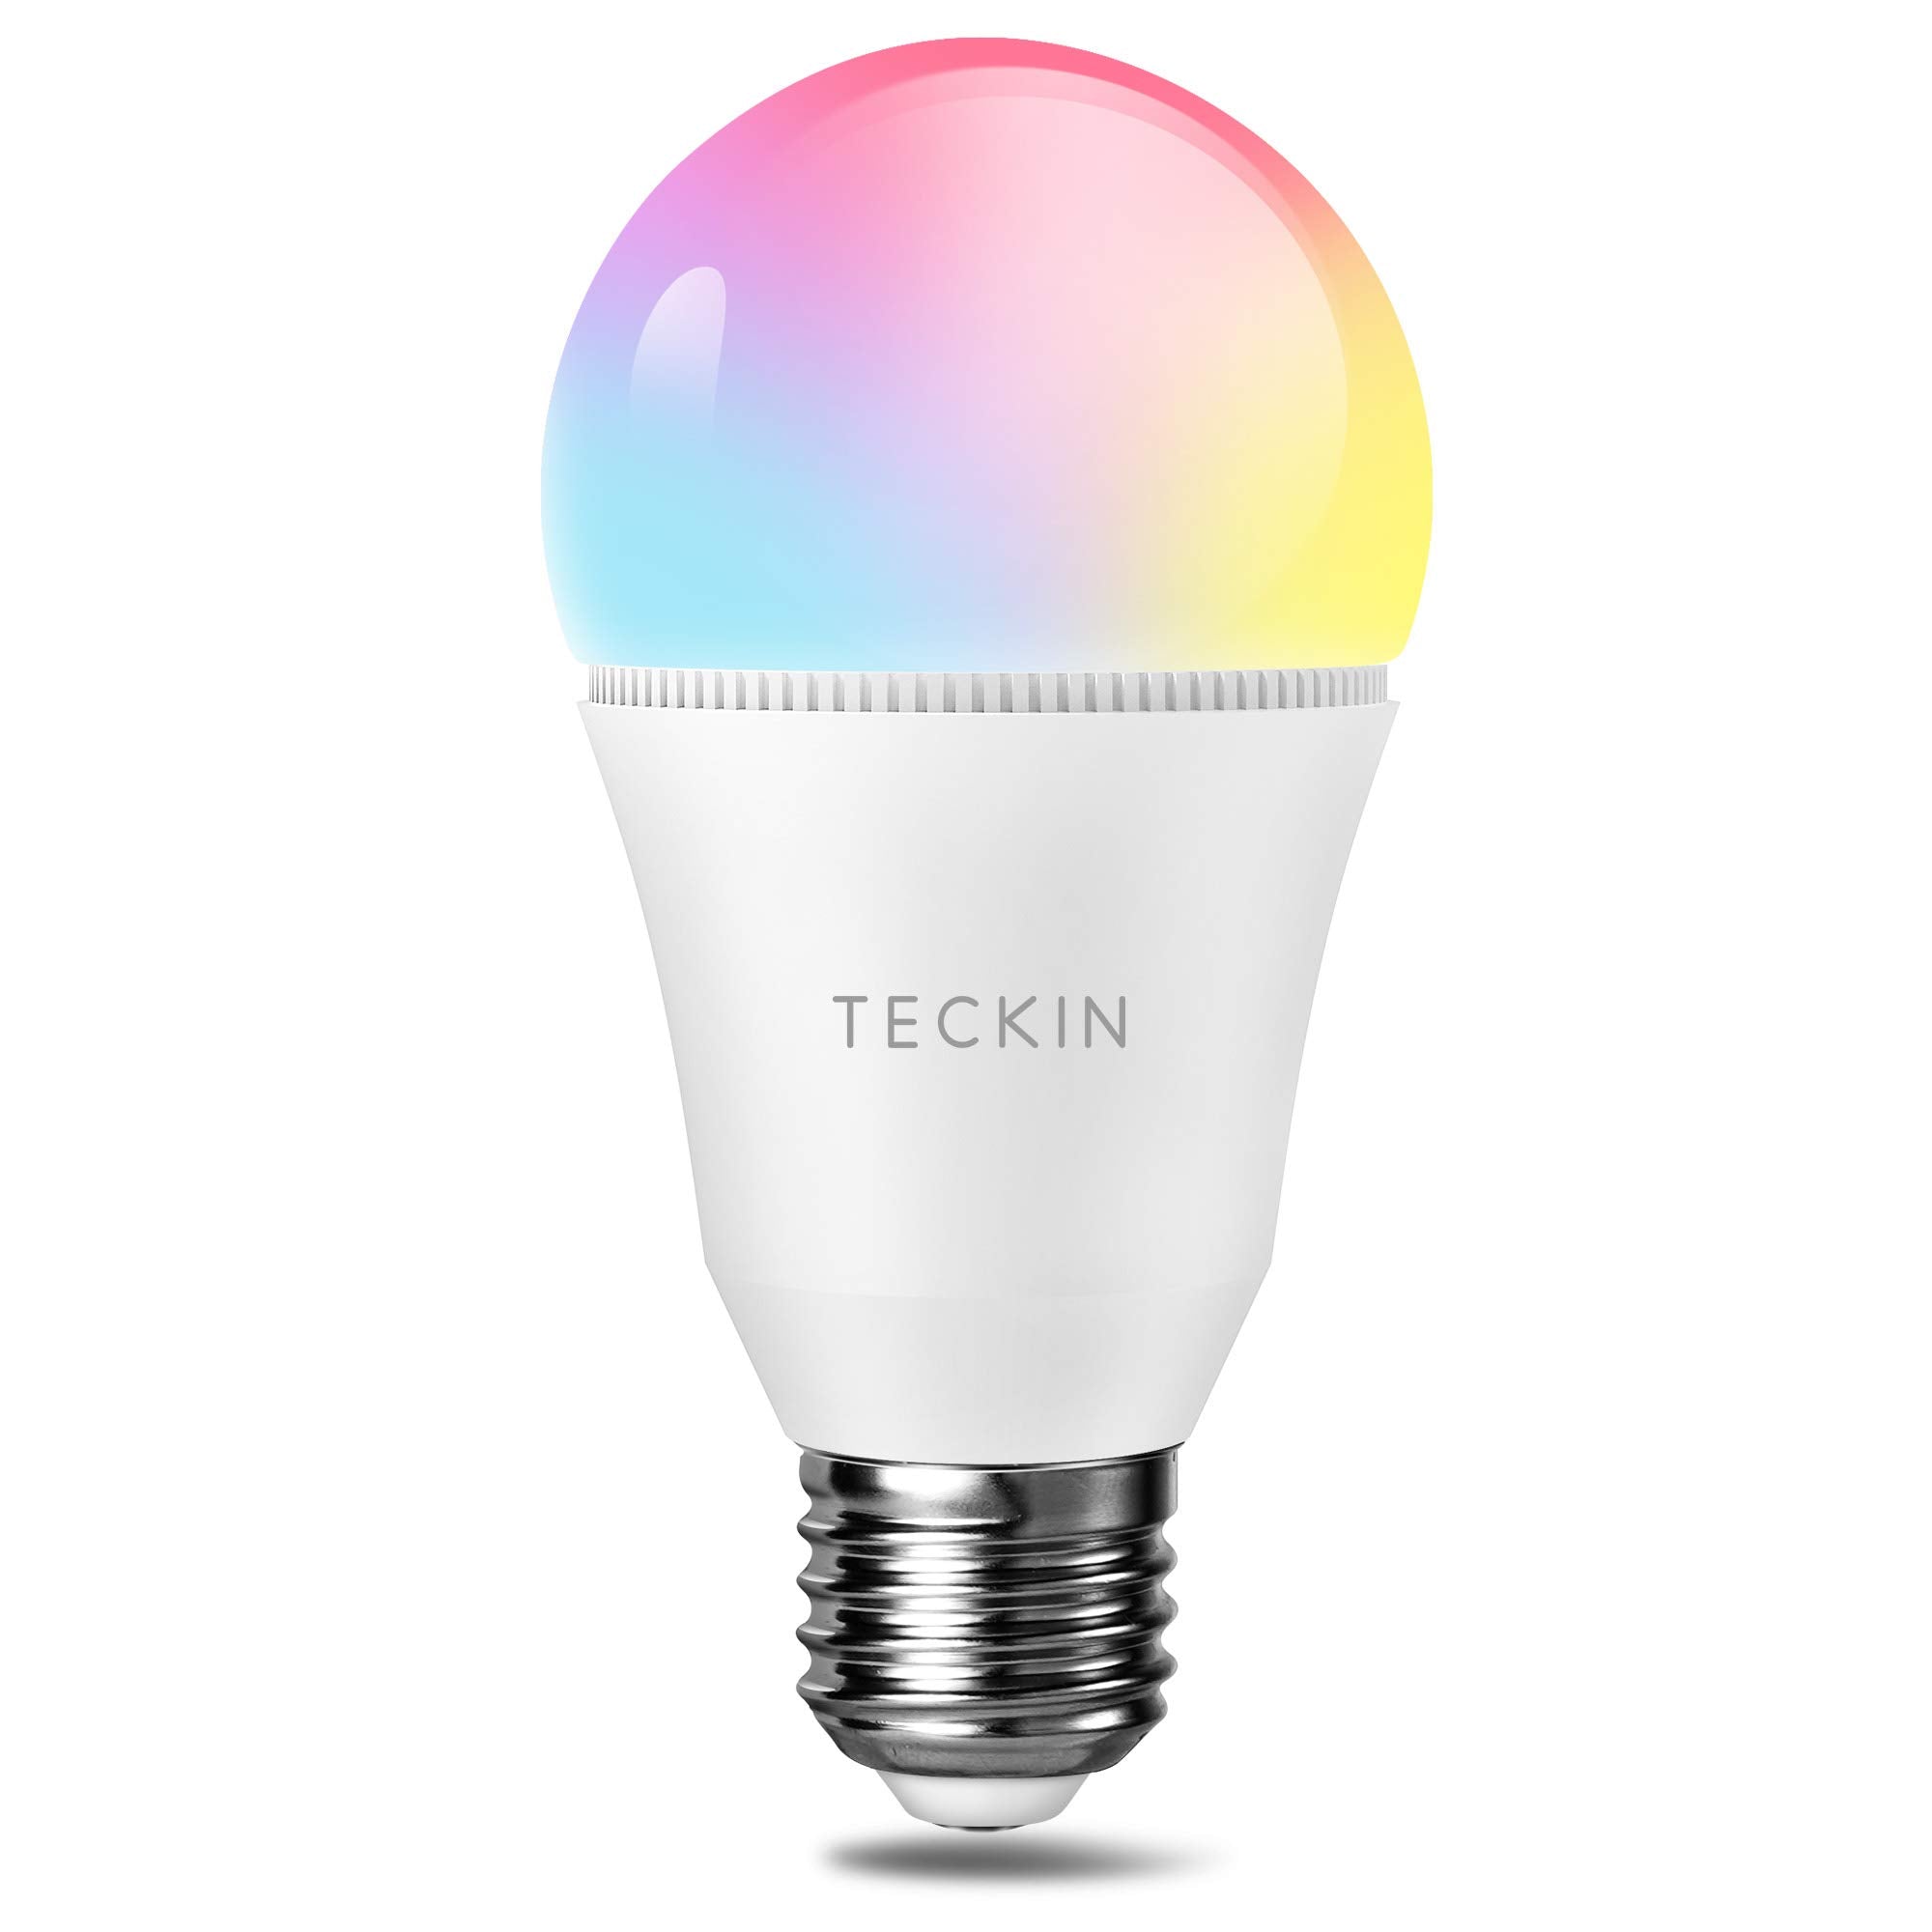 Teckin SB60 smart bulb